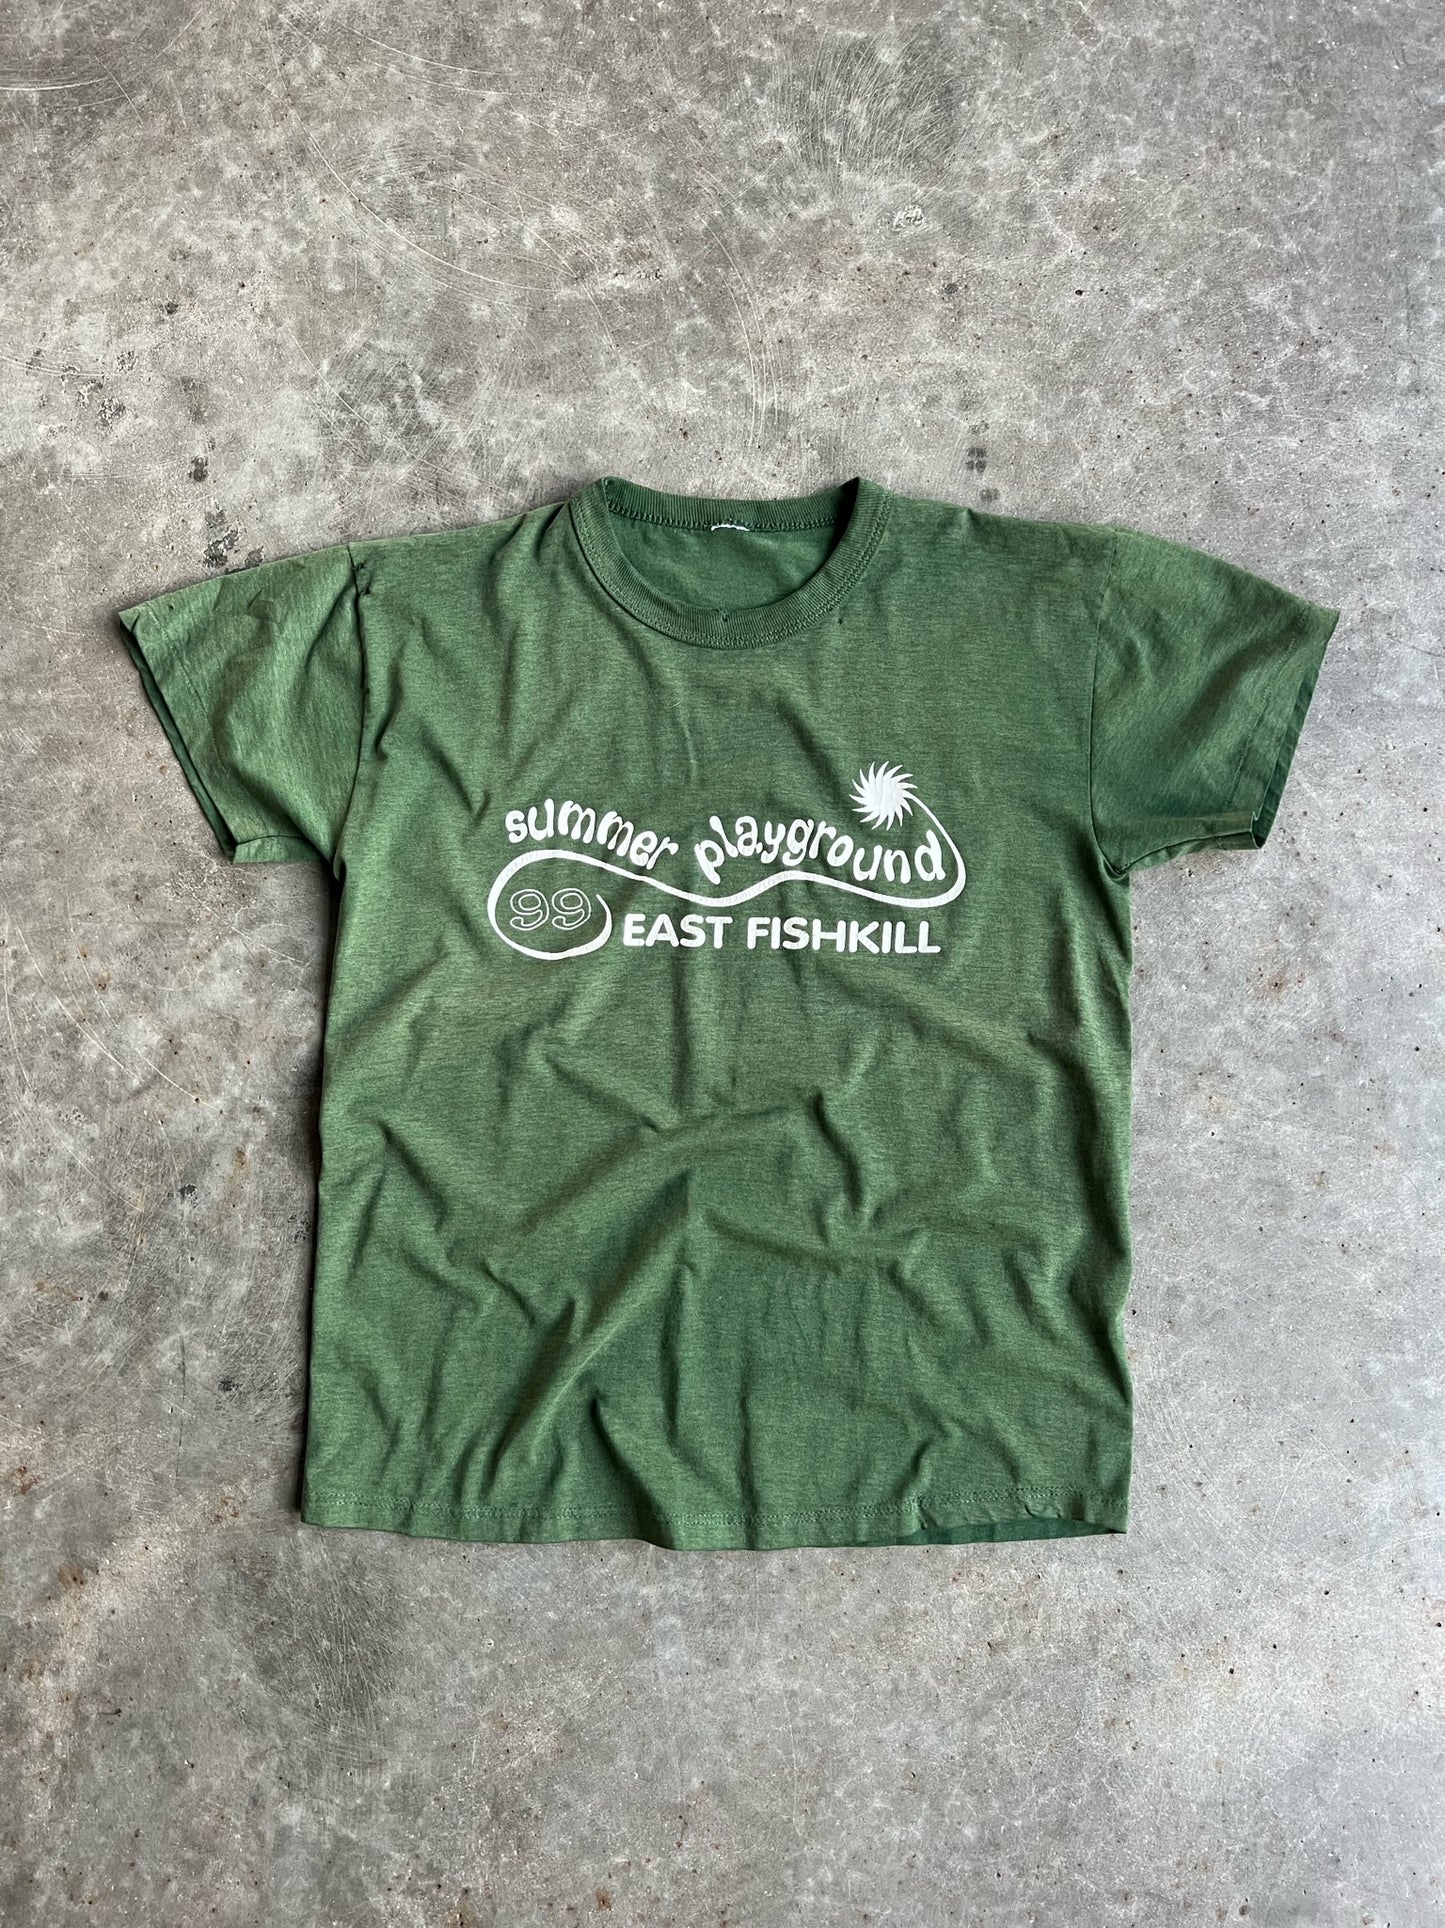 Vintage East Fishkill Shirt - S